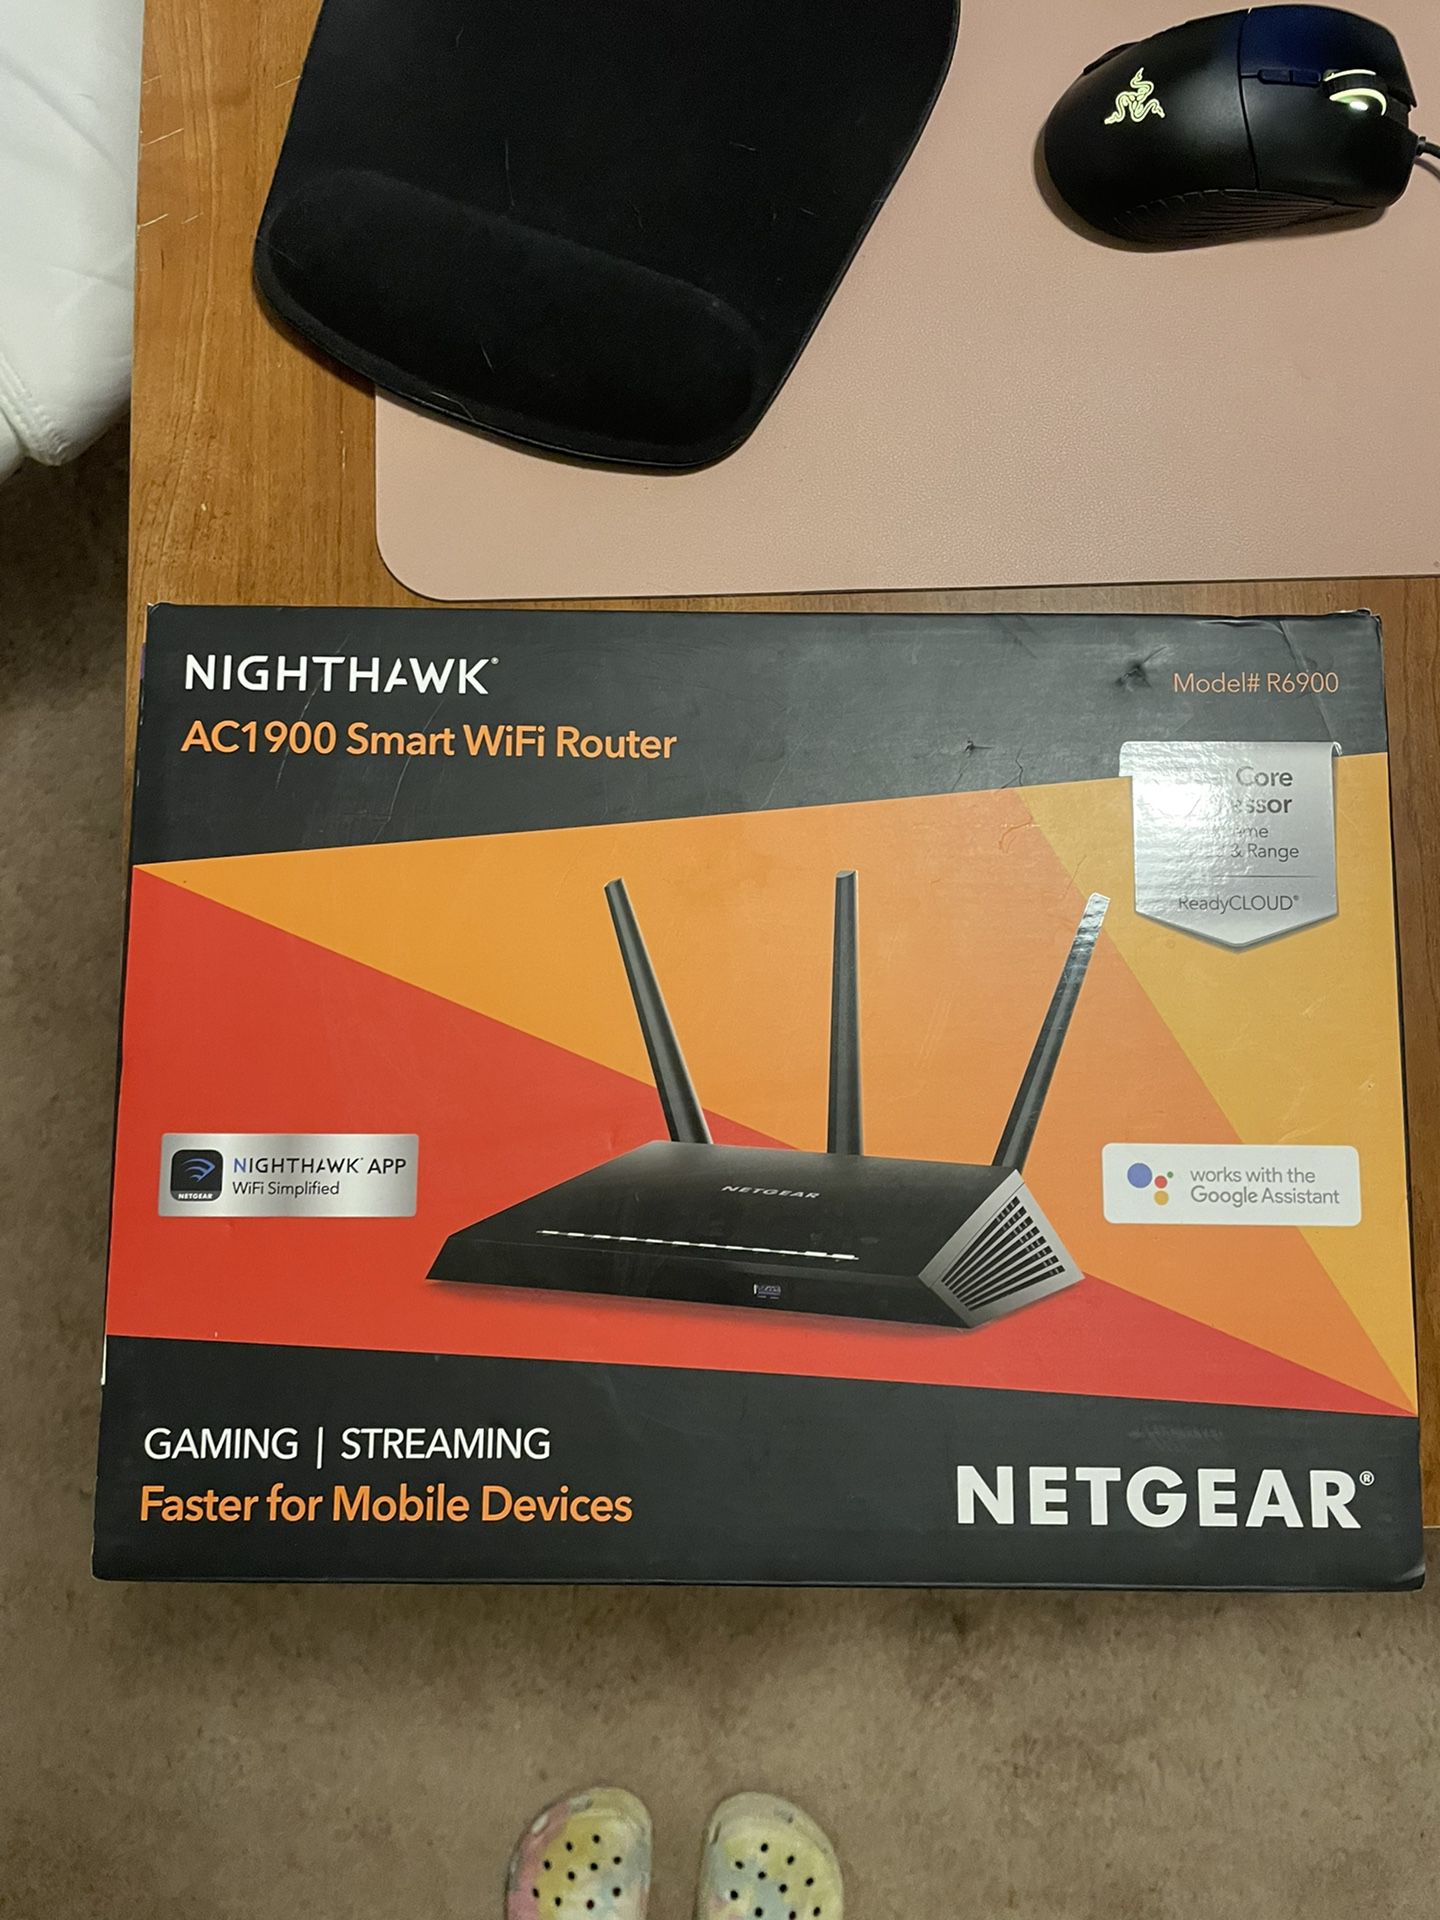 NETGEAR Nighthawk AC1900 Smart WiFi Router – Dual Band Gigabit 